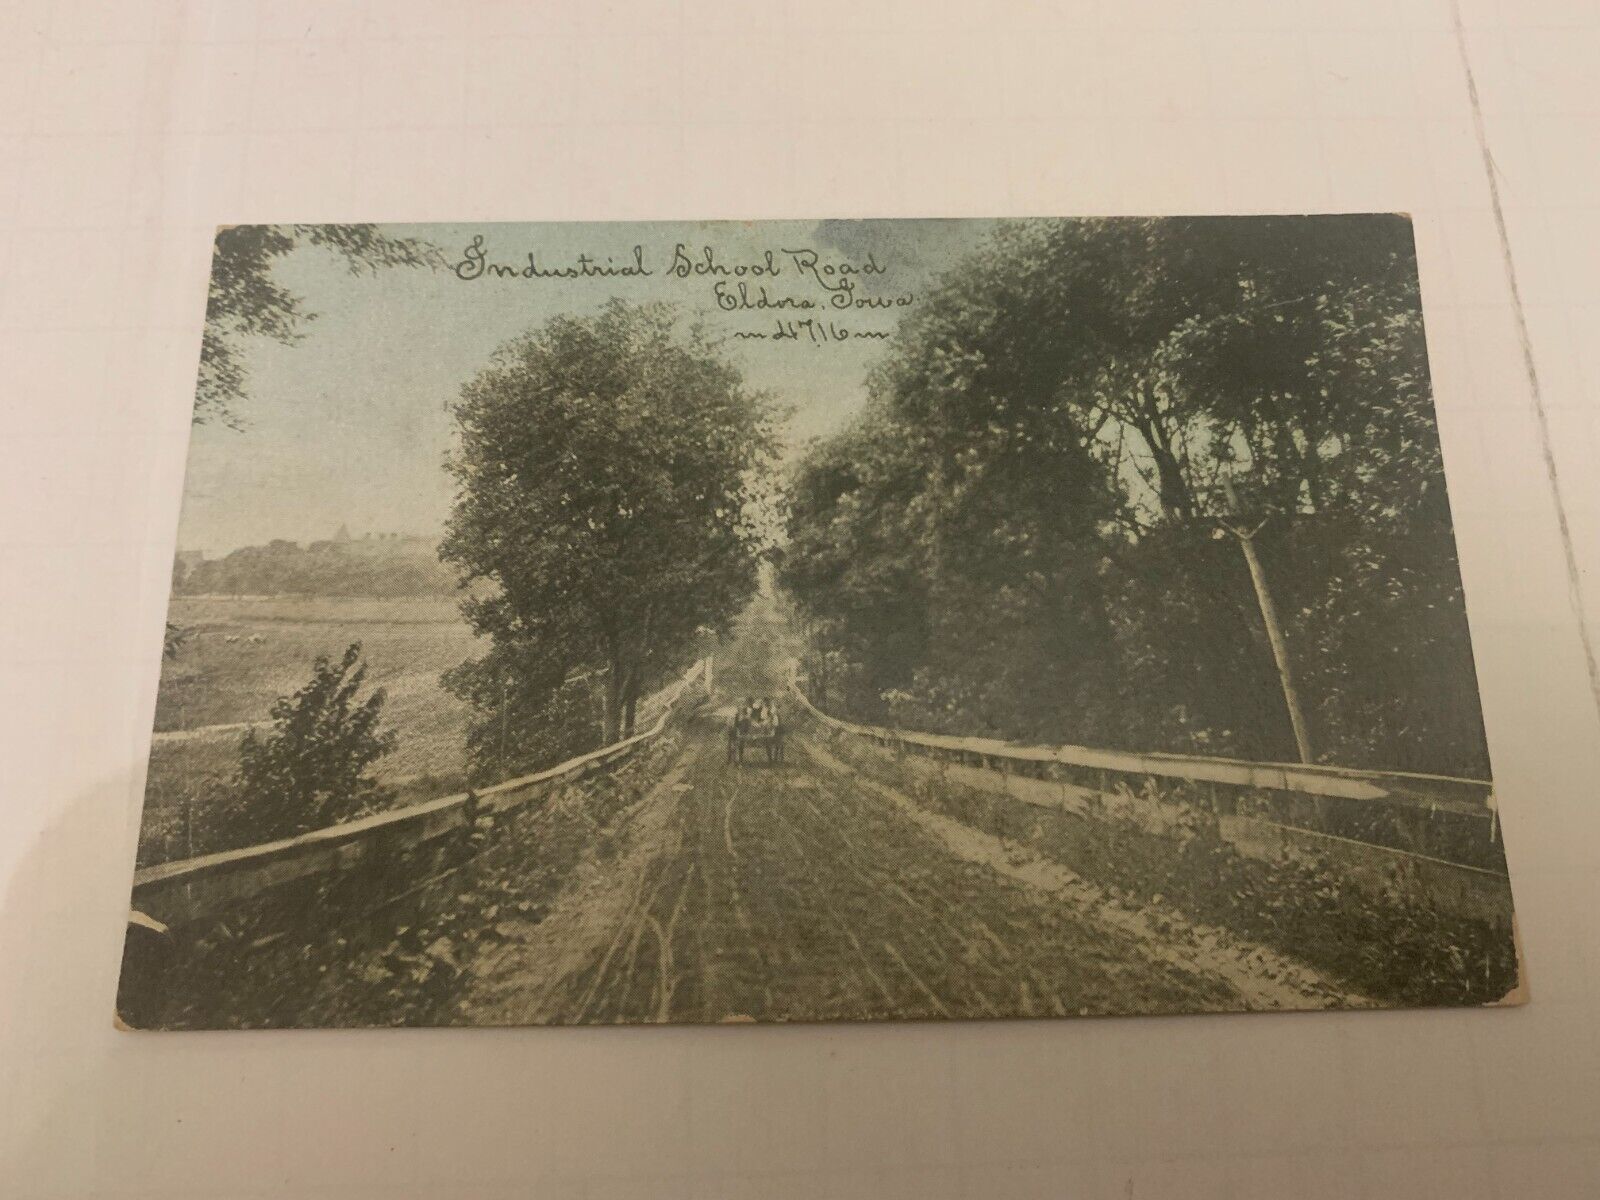 1908 Industrial School Road Eldora Iowa Postcard